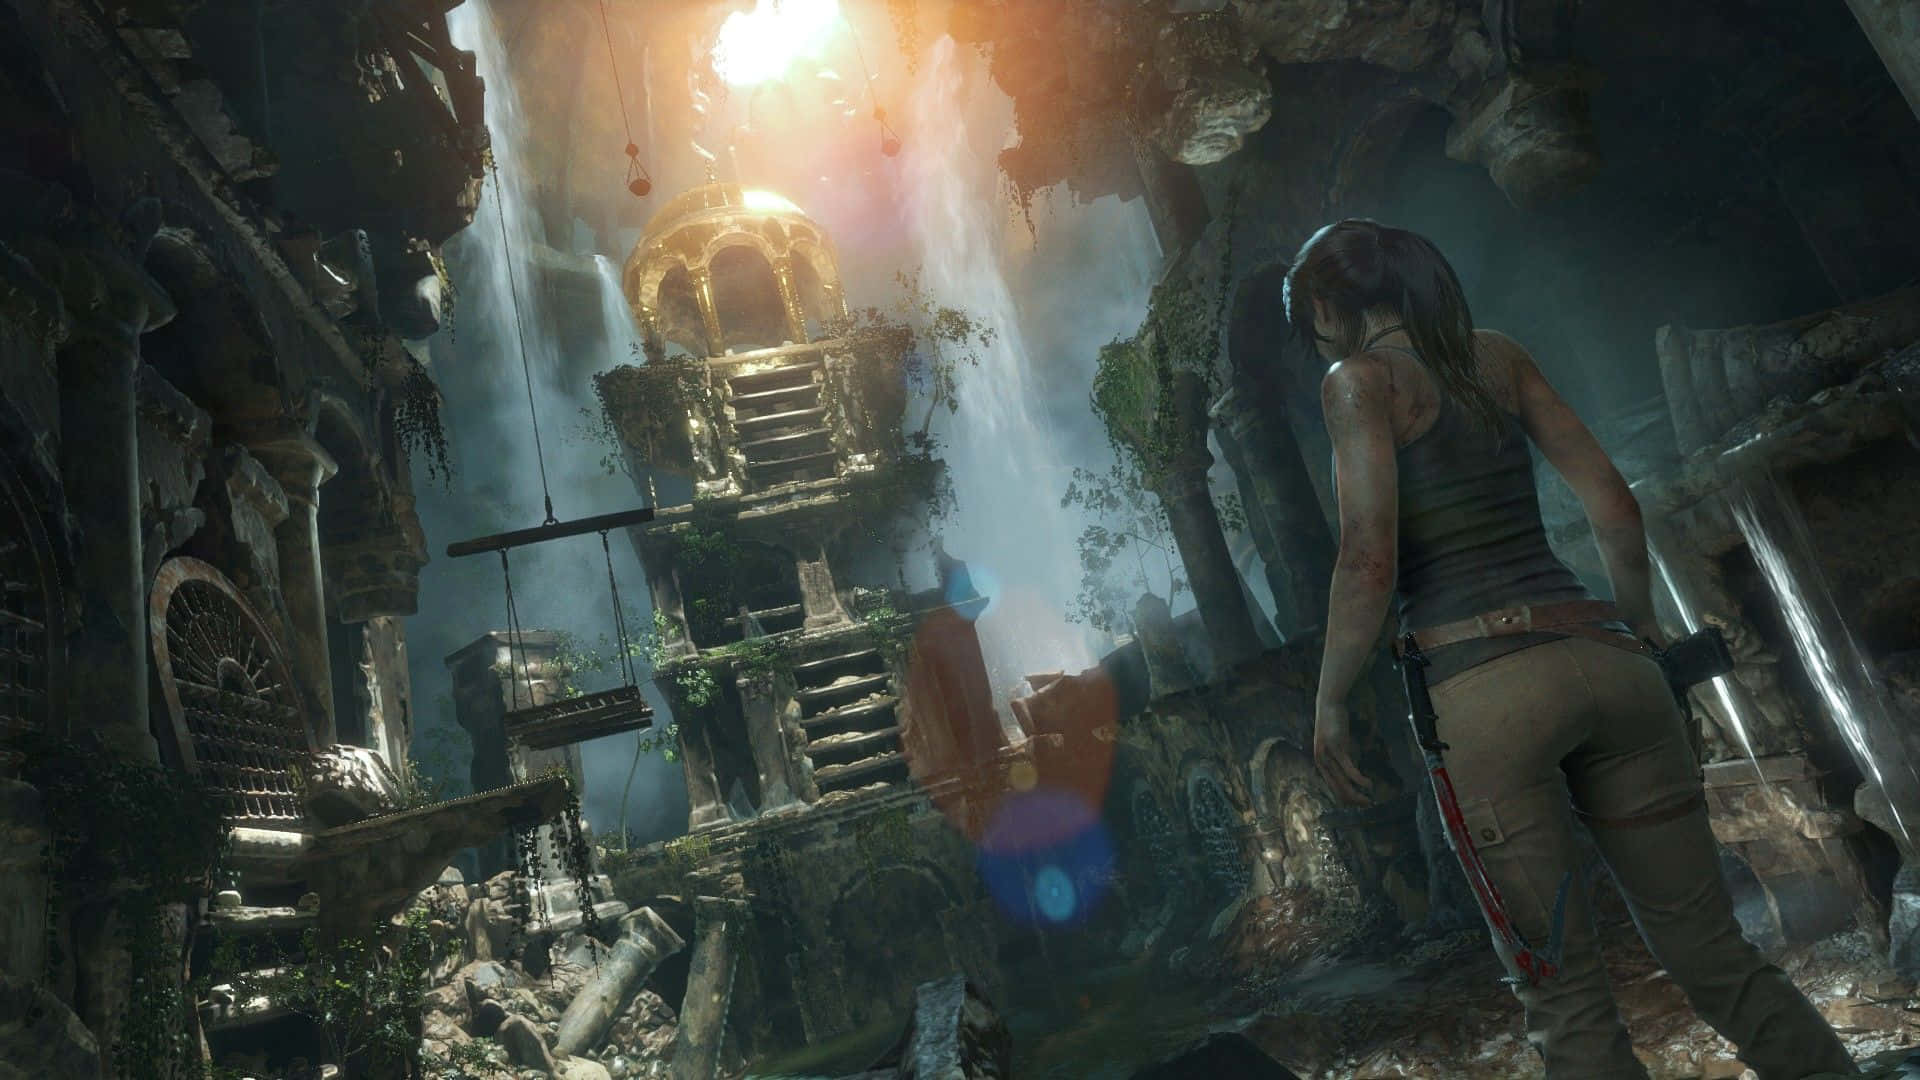 Lara Croft starter en farefuld rejse i Rise of the Tomb Raider. Wallpaper